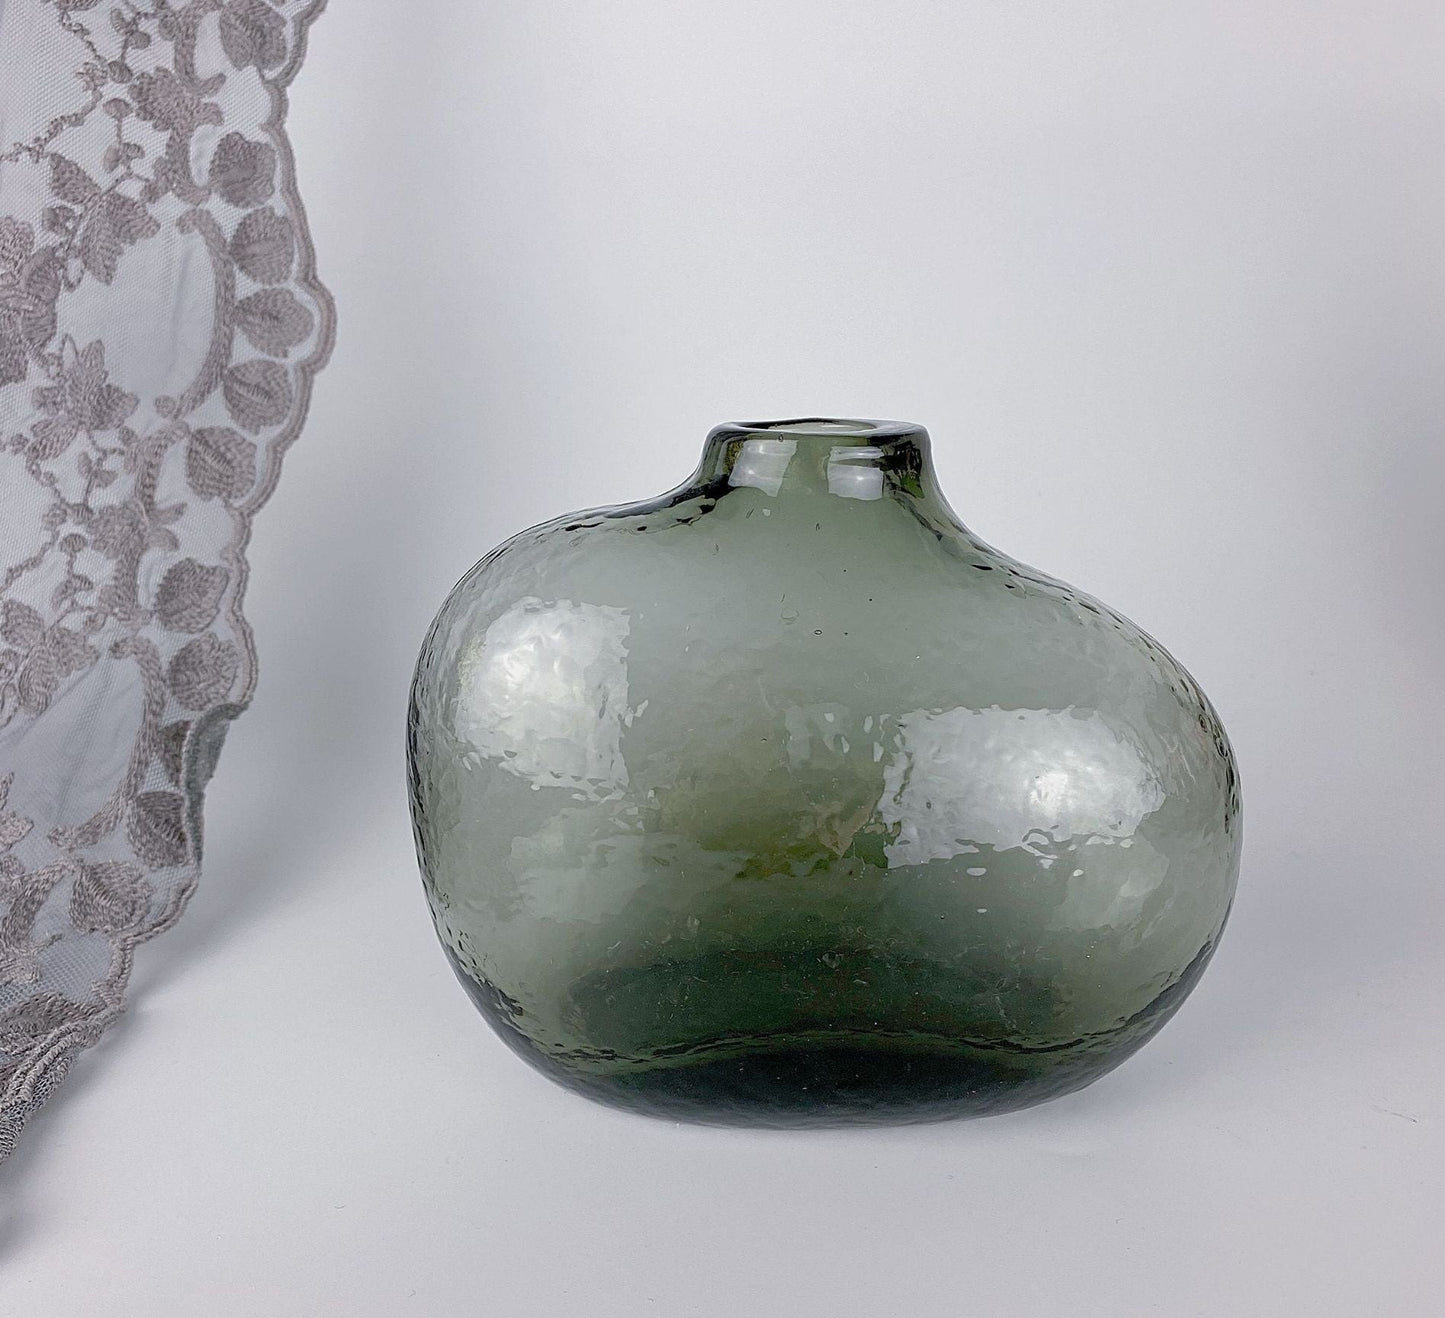 The Freida Glass Vase